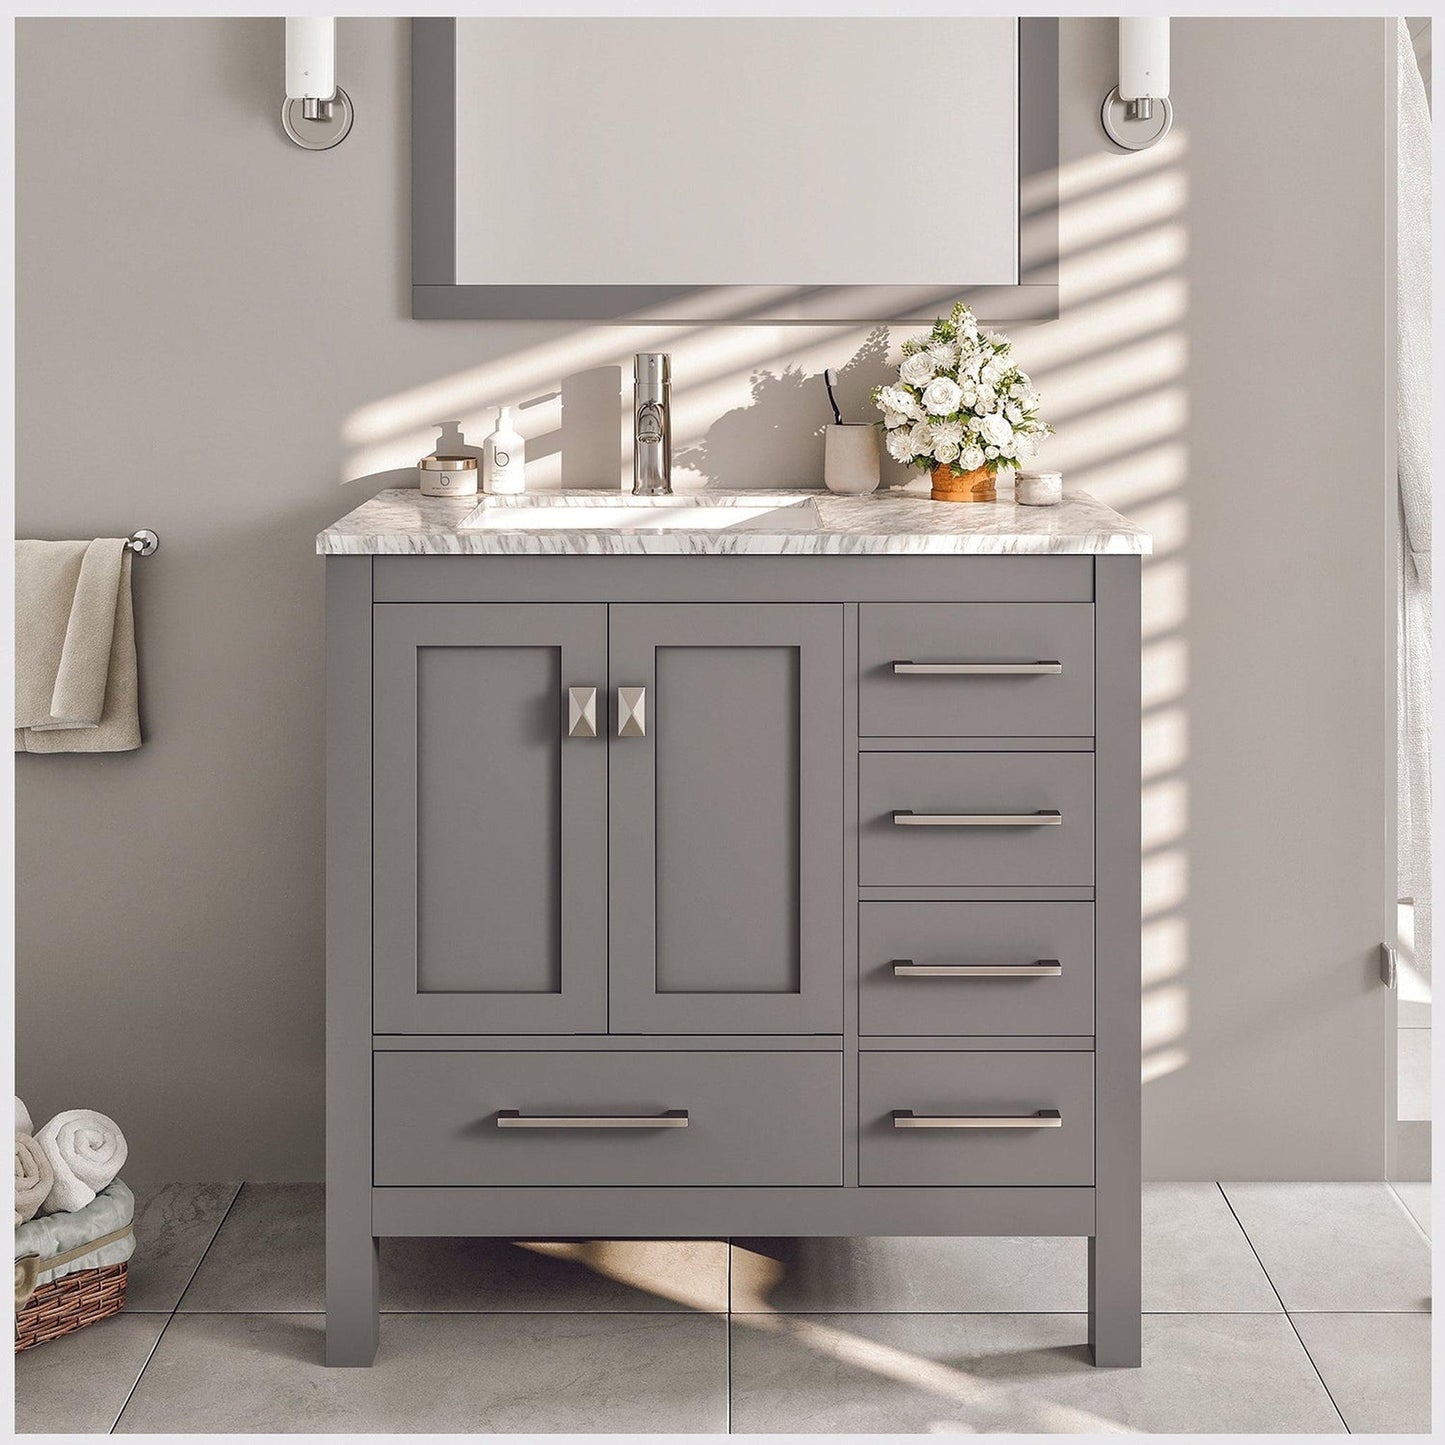 Eviva London 36" x 34" Gray Freestanding Bathroom Vanity With Carrara Marble Countertop and Single Undermount Sink